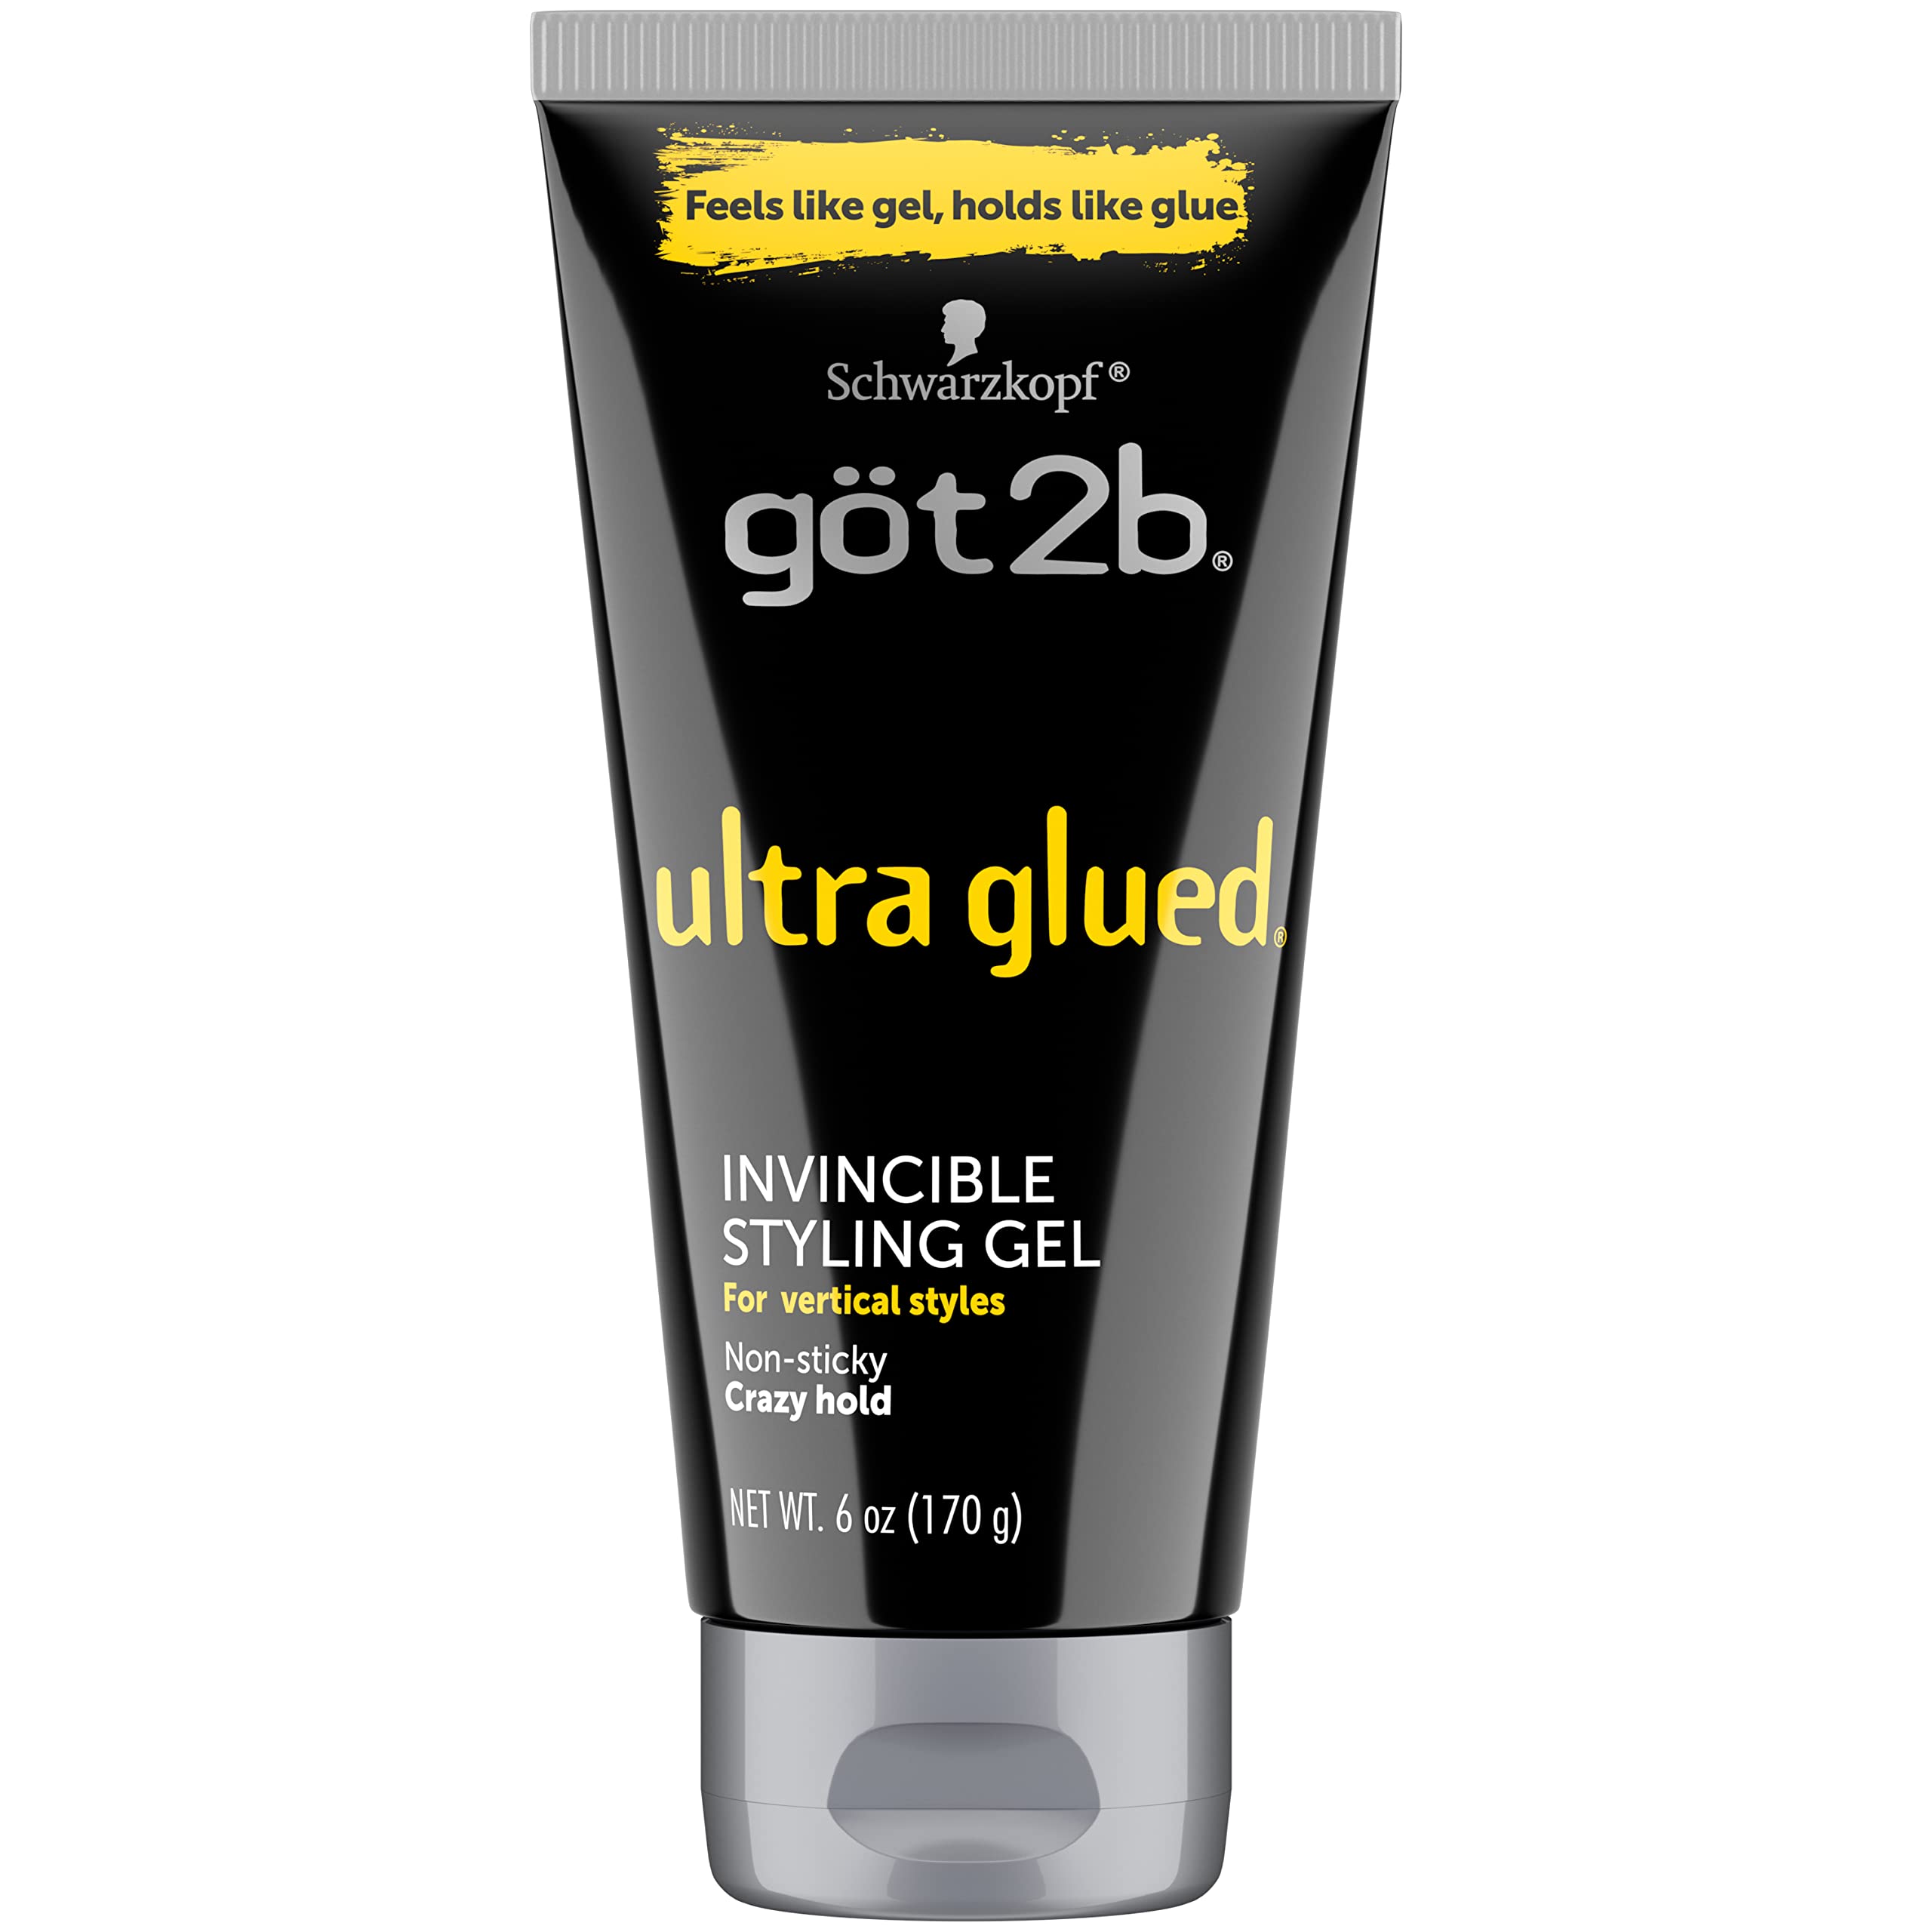 Got2B Ultra Glued Invincible Styling Gel 2 6oz tubes + 1 Travel 1.25oz tube